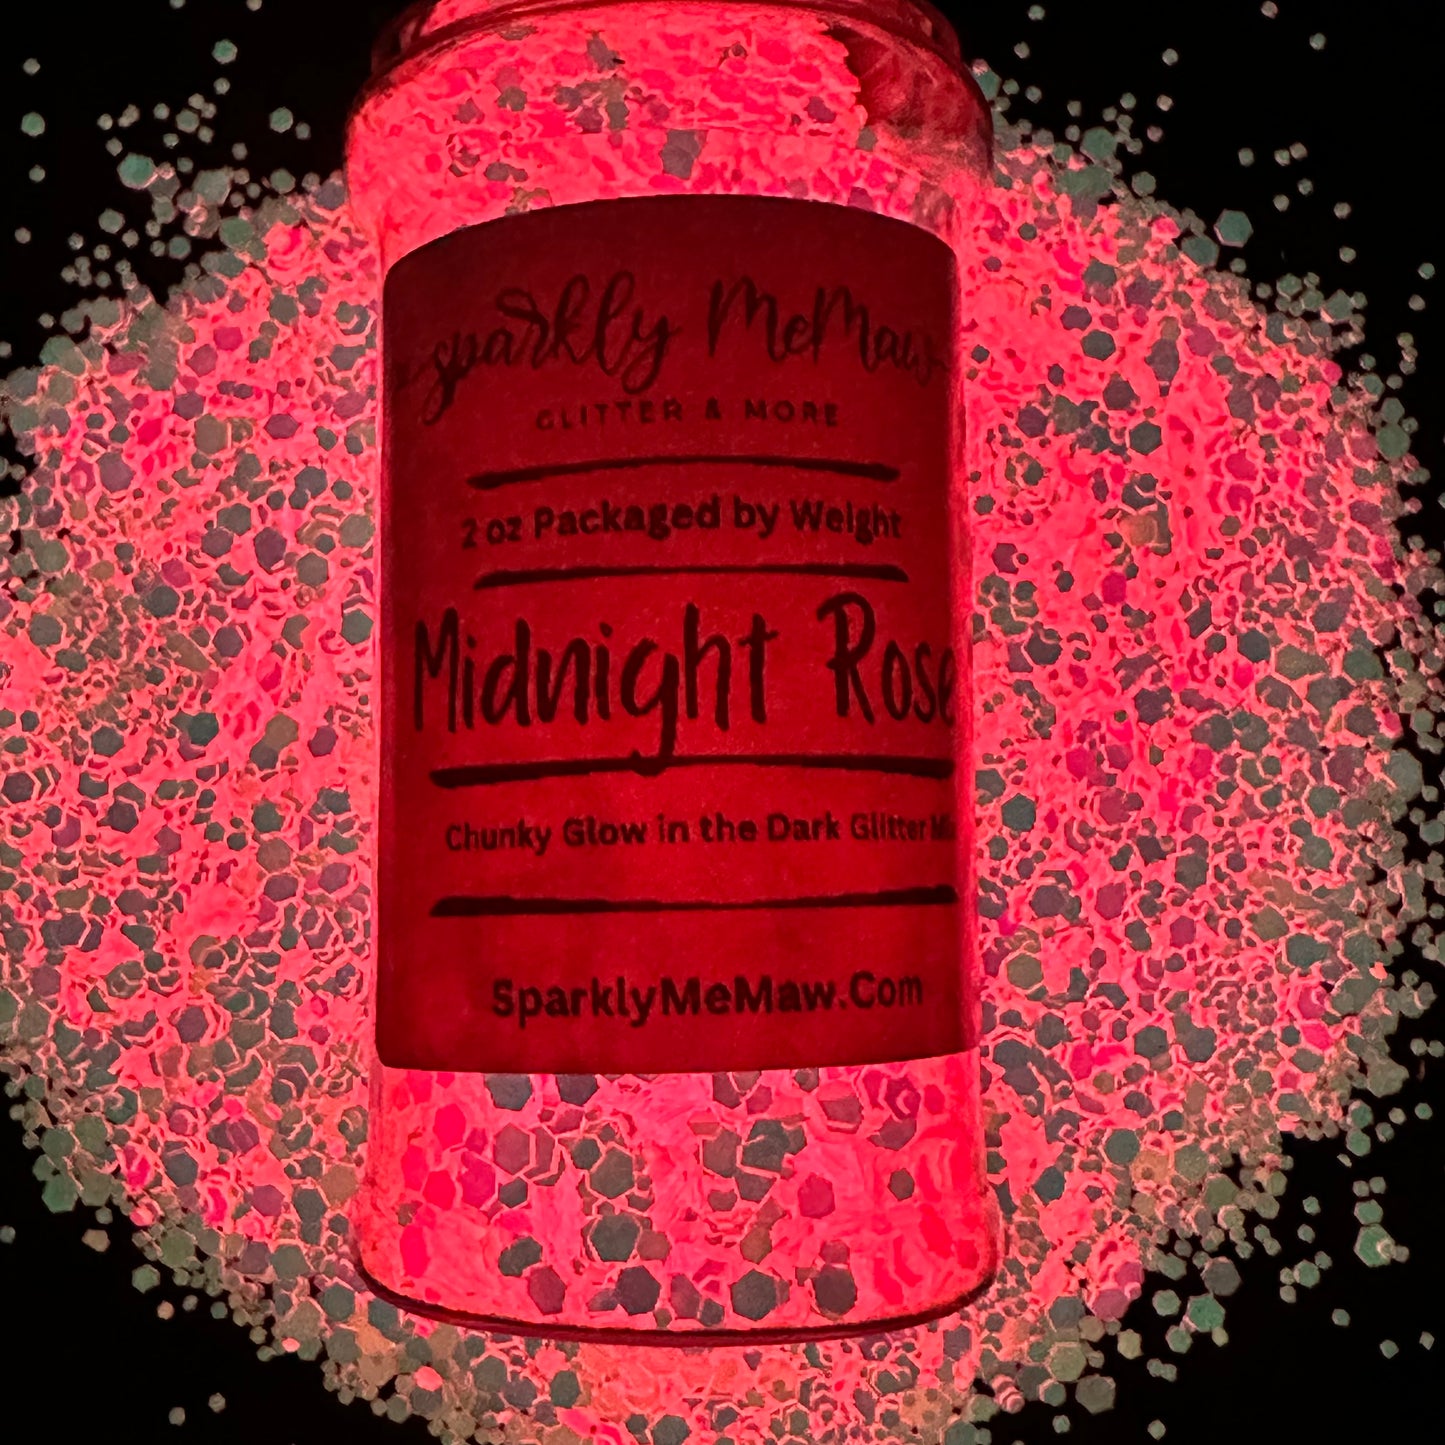 Midnight Rose Chunky Glow in the Dark Glitter Mix